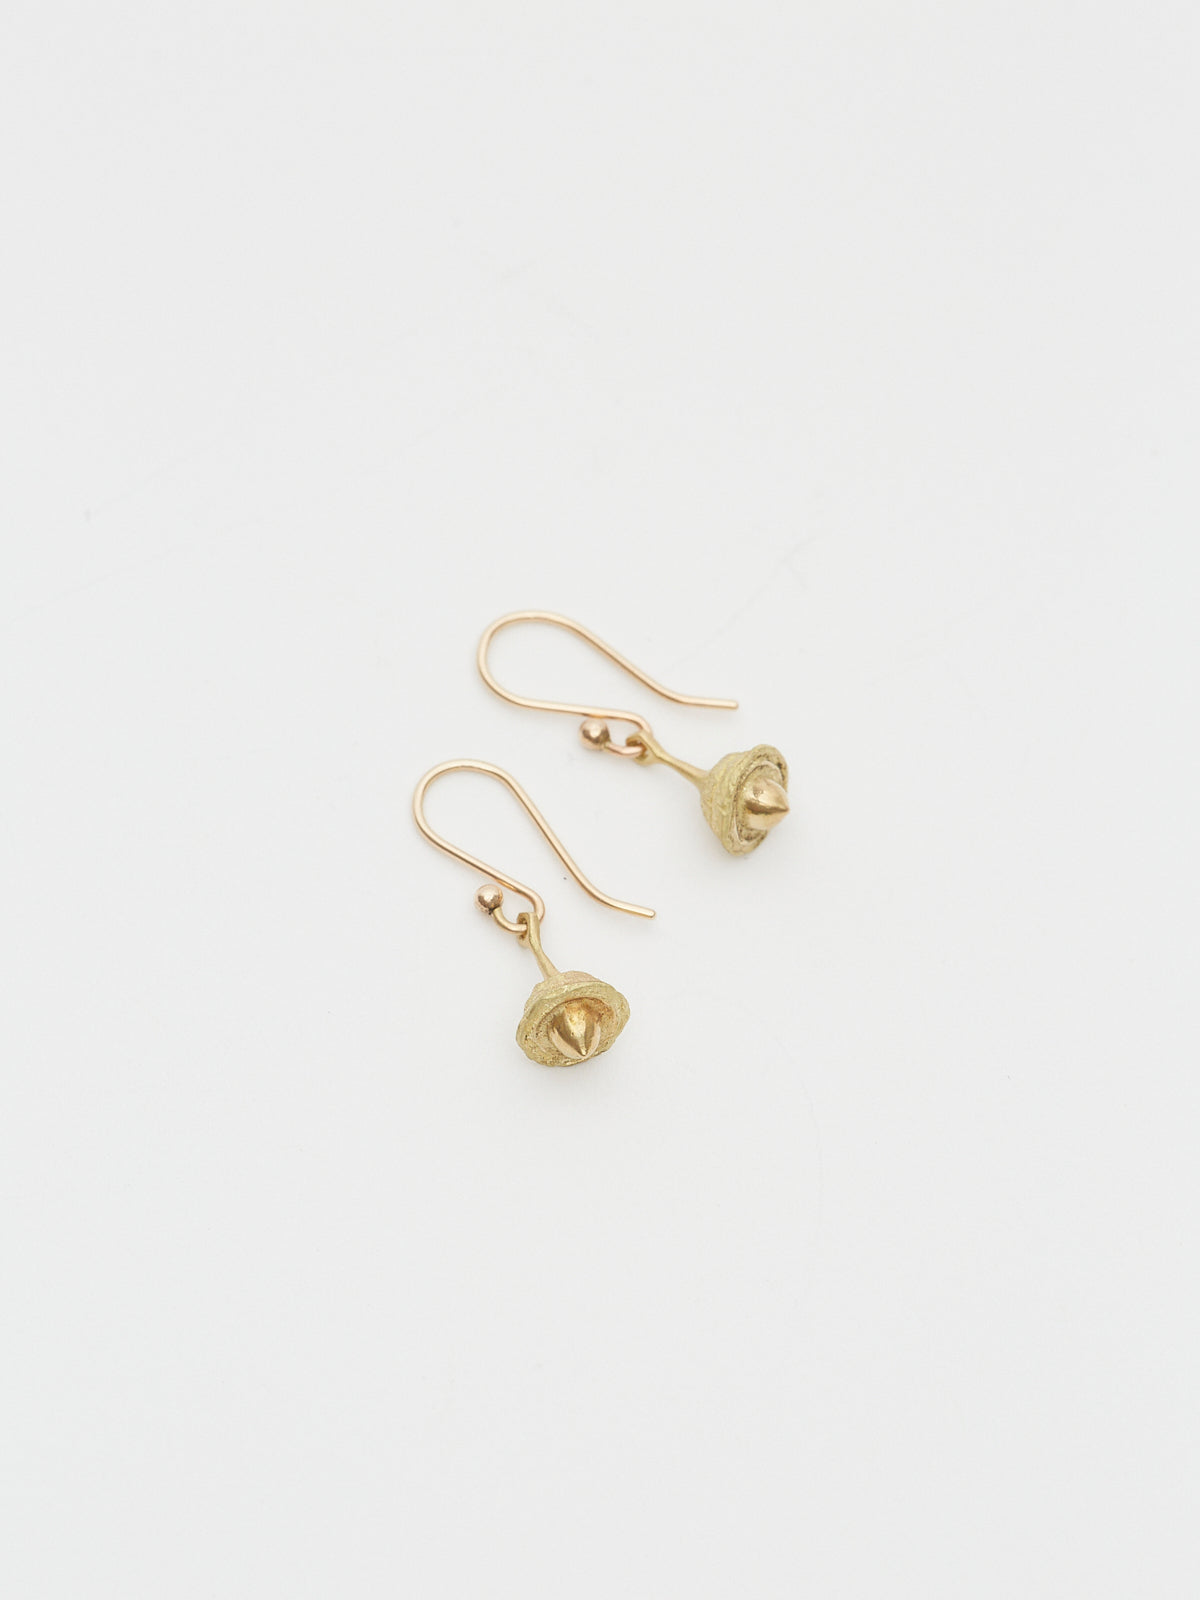 Gabriella Kiss - Eucalyptus Seed Bell Earrings in 18k Yellow Gold